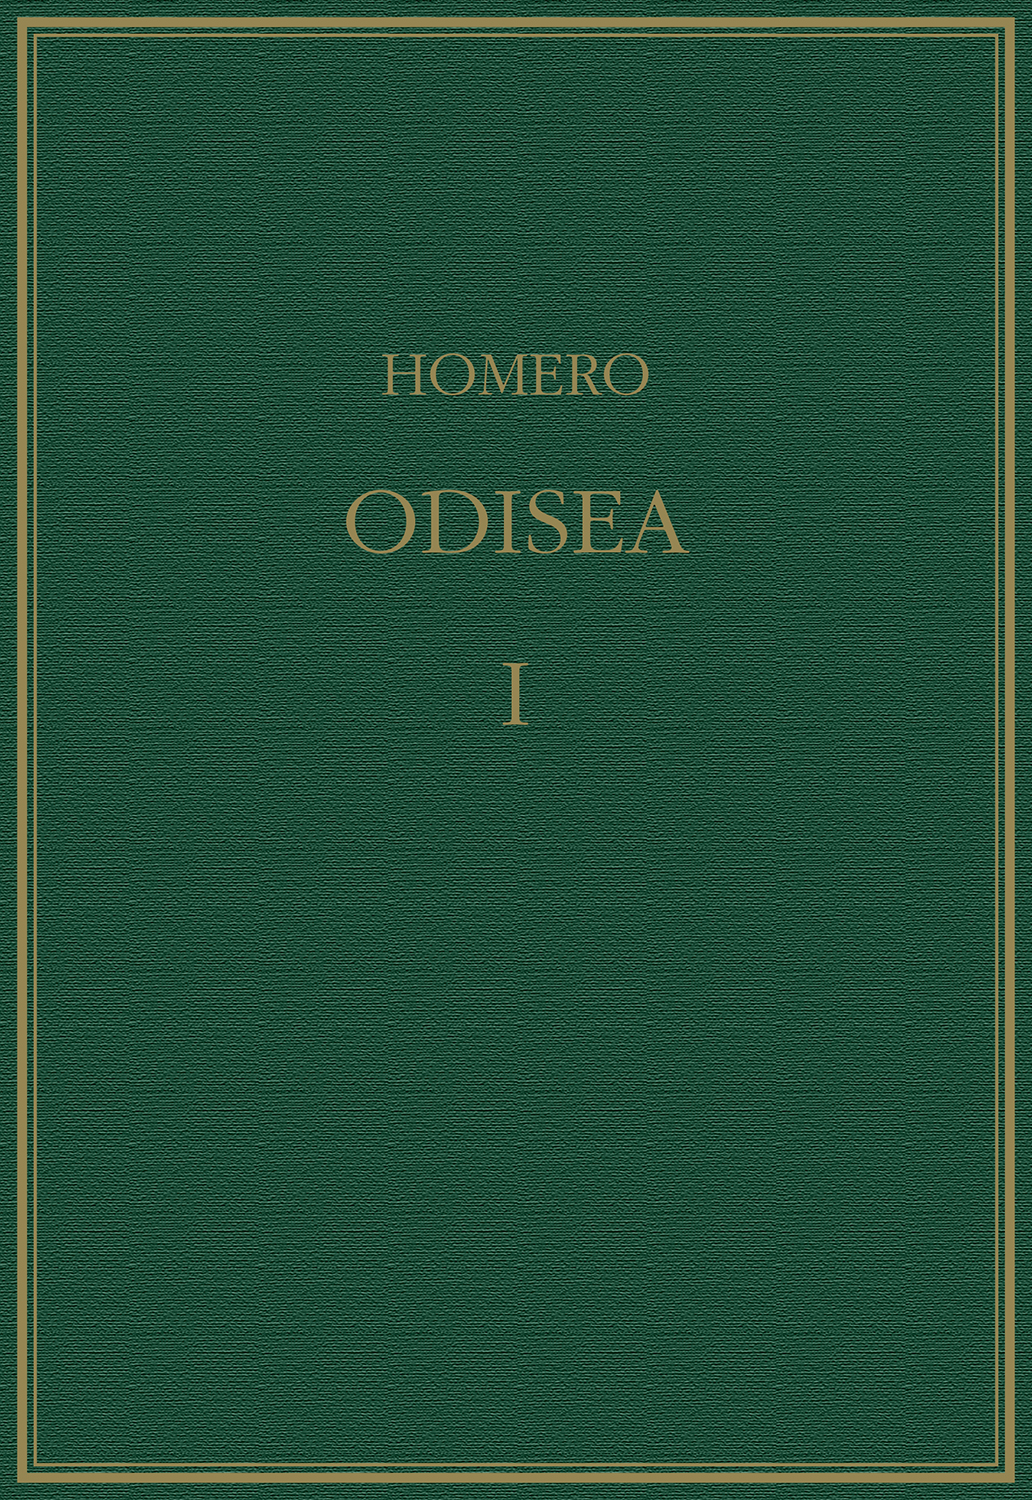 Odisea - Homero - Penguin Clasicos - Libro